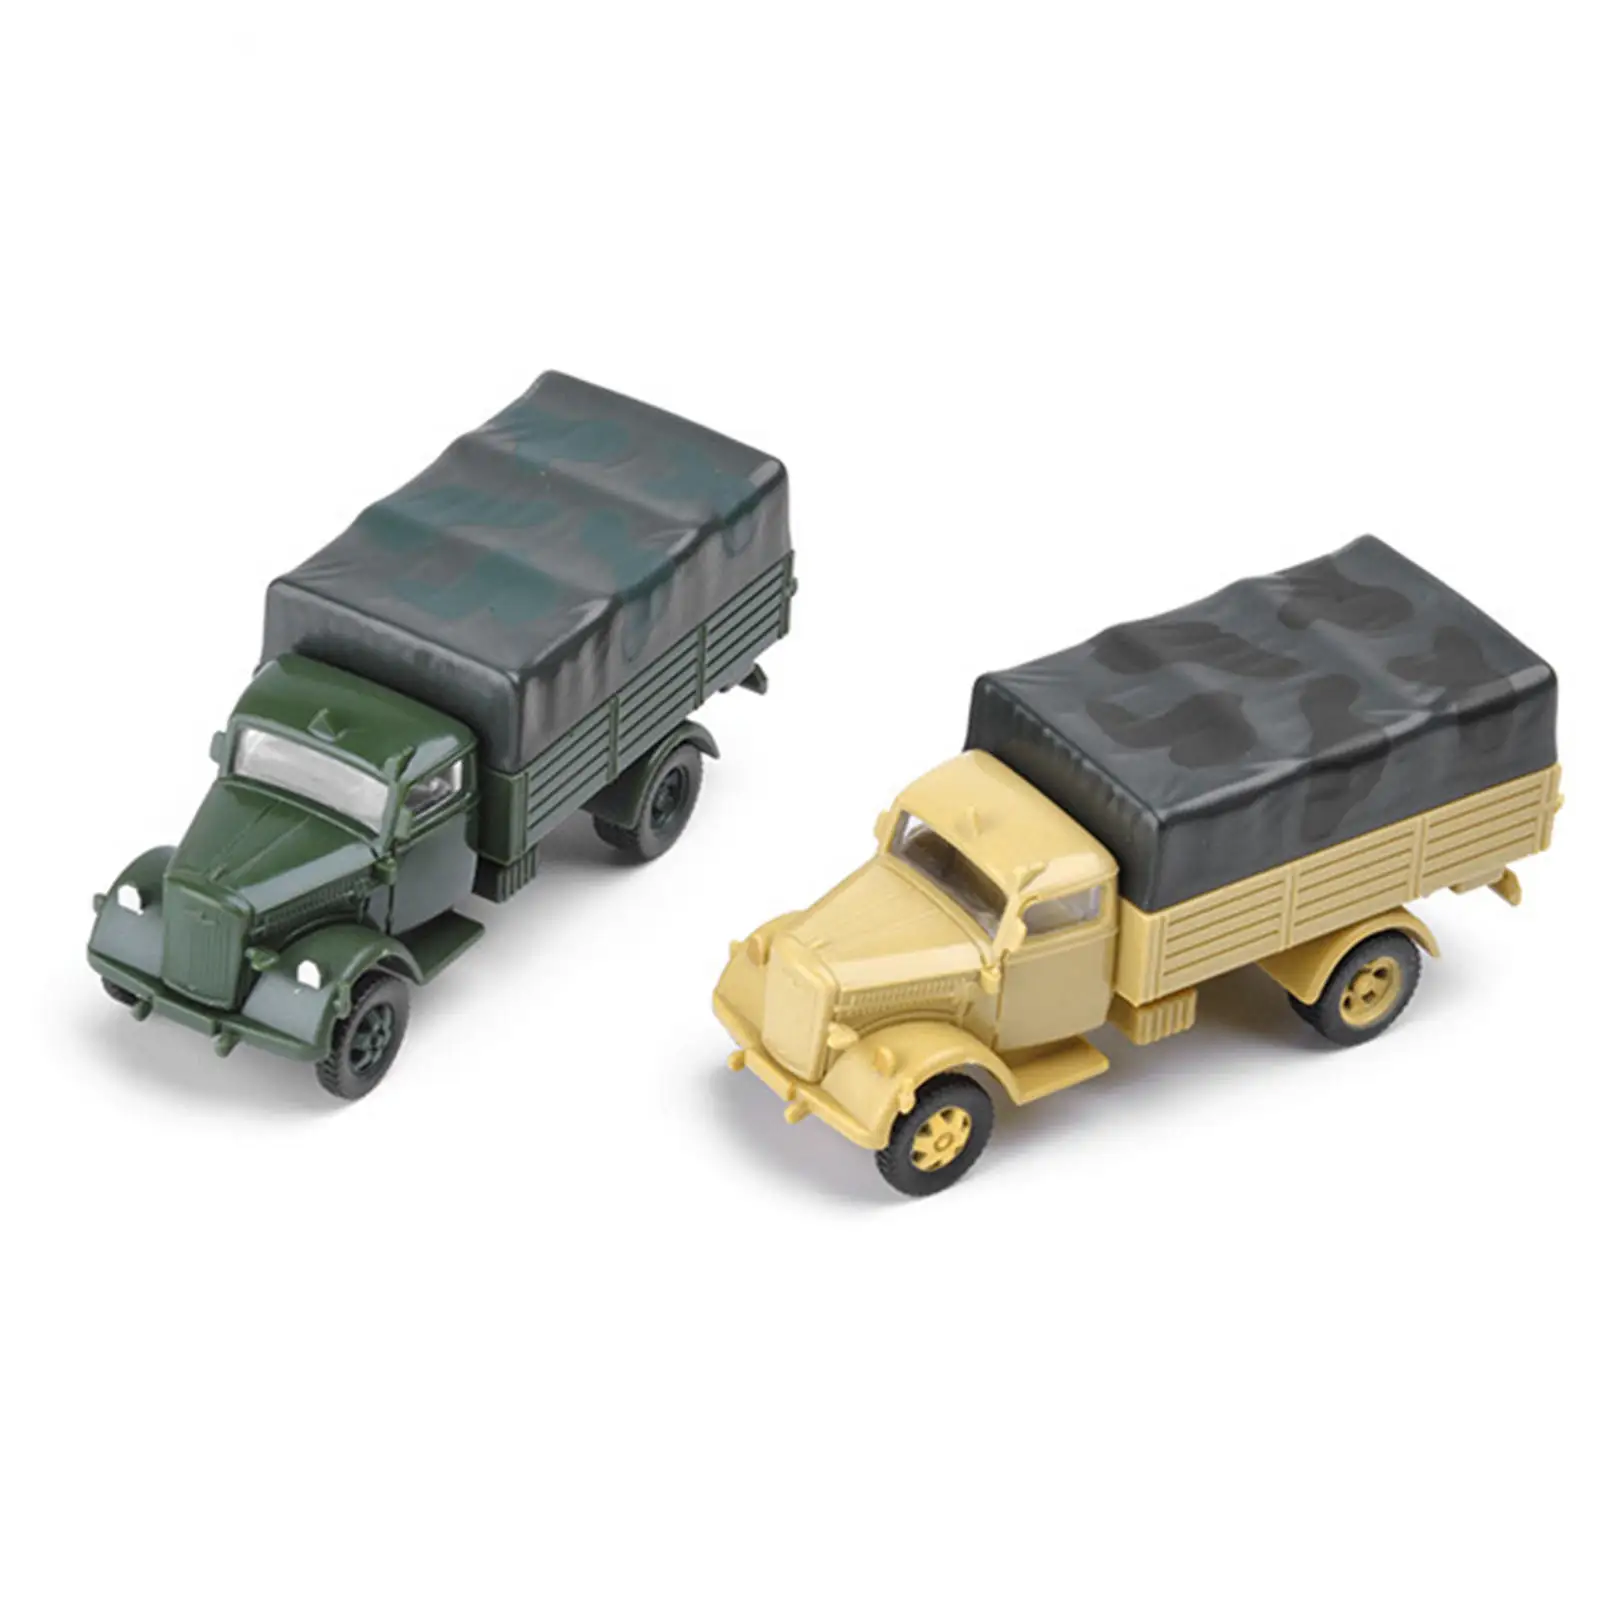 2x1: 72 4D Assemble Truck Toy Educational Car Model Vehicle Toy Kit